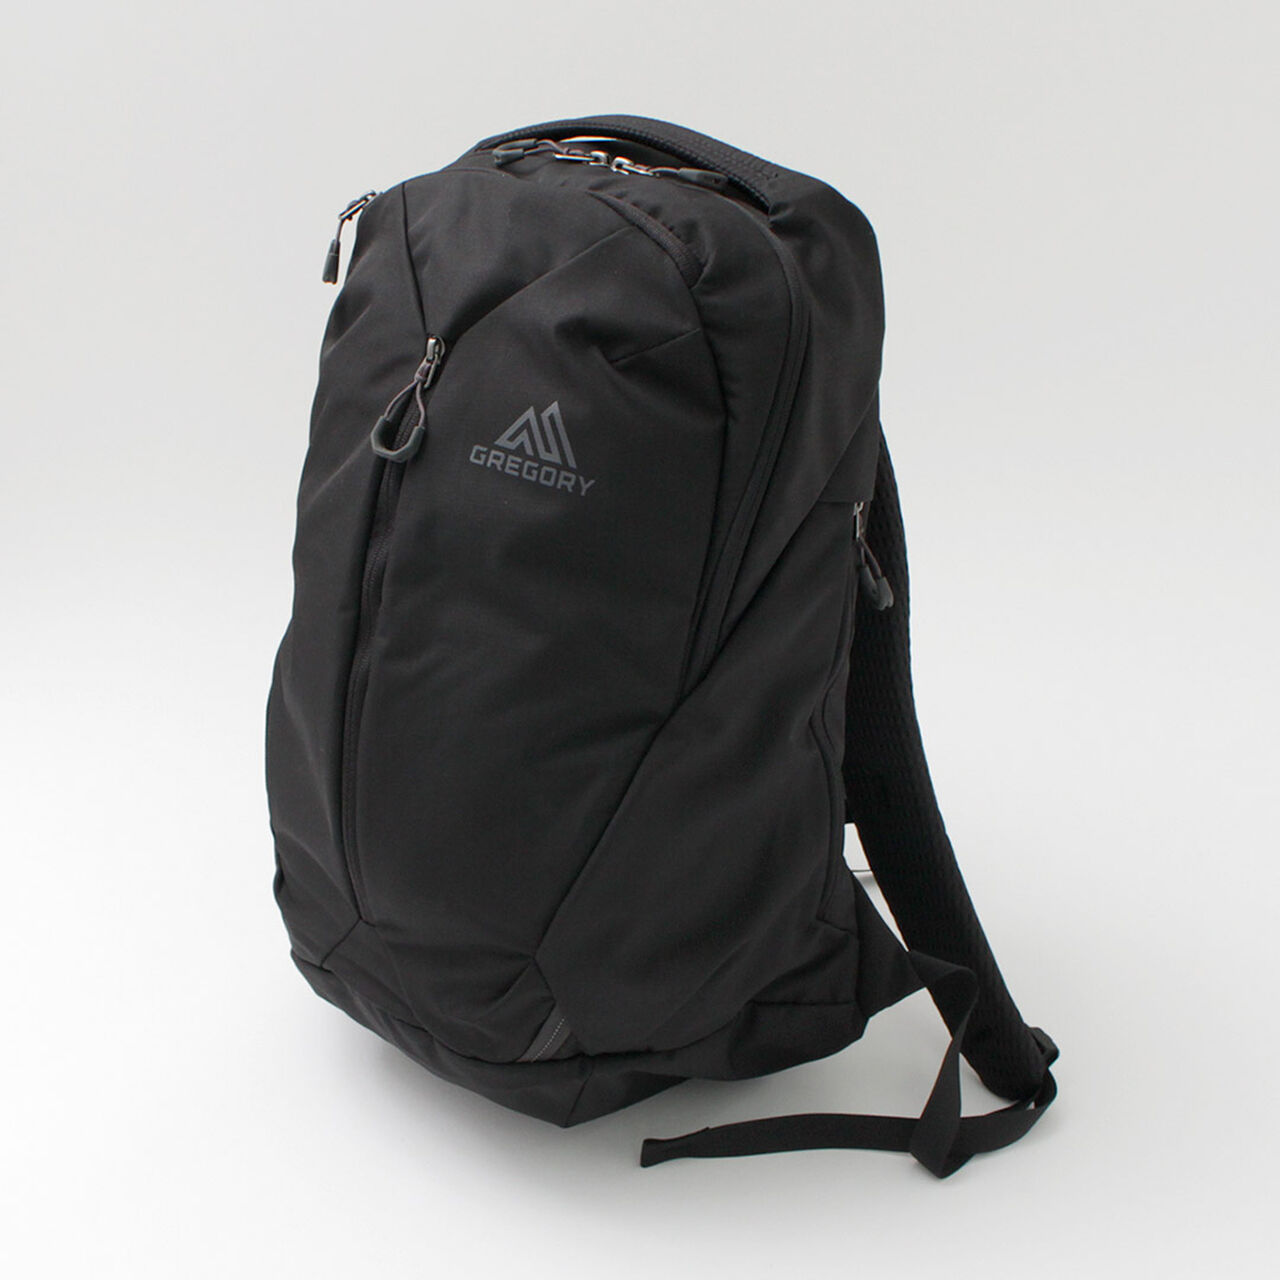 RHUNE 20 backpack,, large image number 2